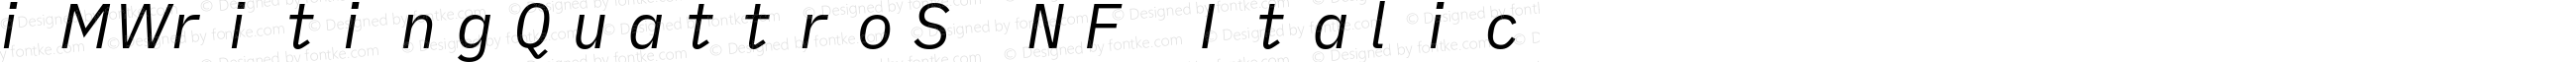 iM Writing Quattro S Italic Nerd Font Complete Mono Windows Compatible